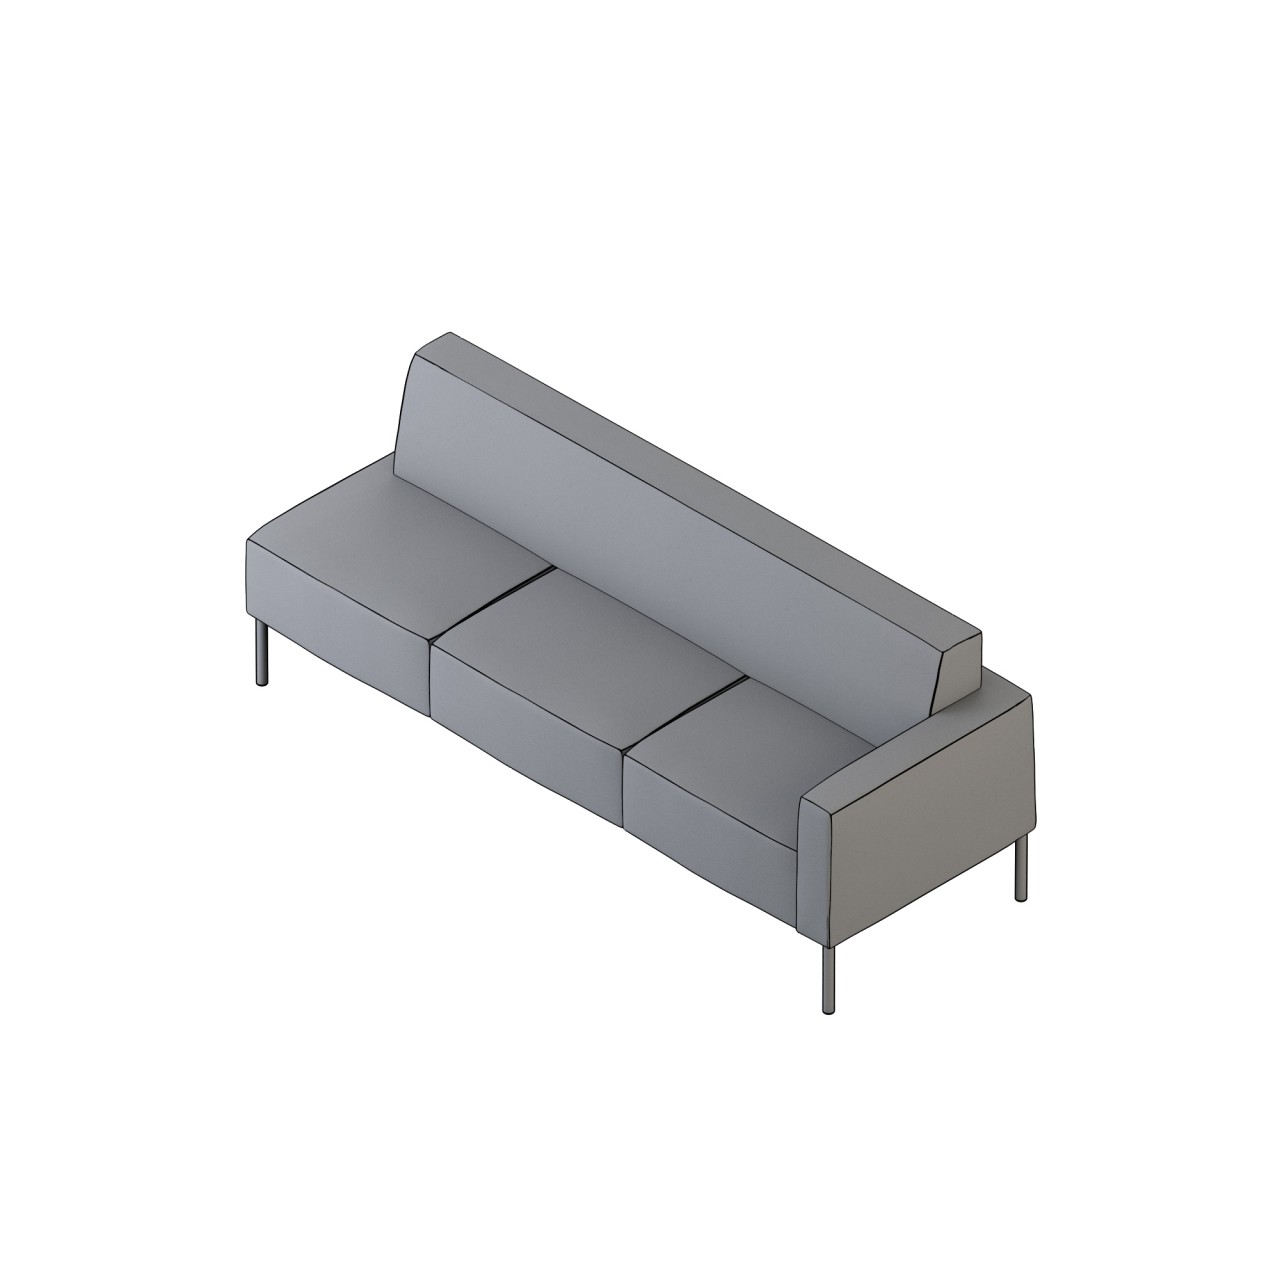 mozzo lounge/modular - 62019L
COM 9.25 COL 185